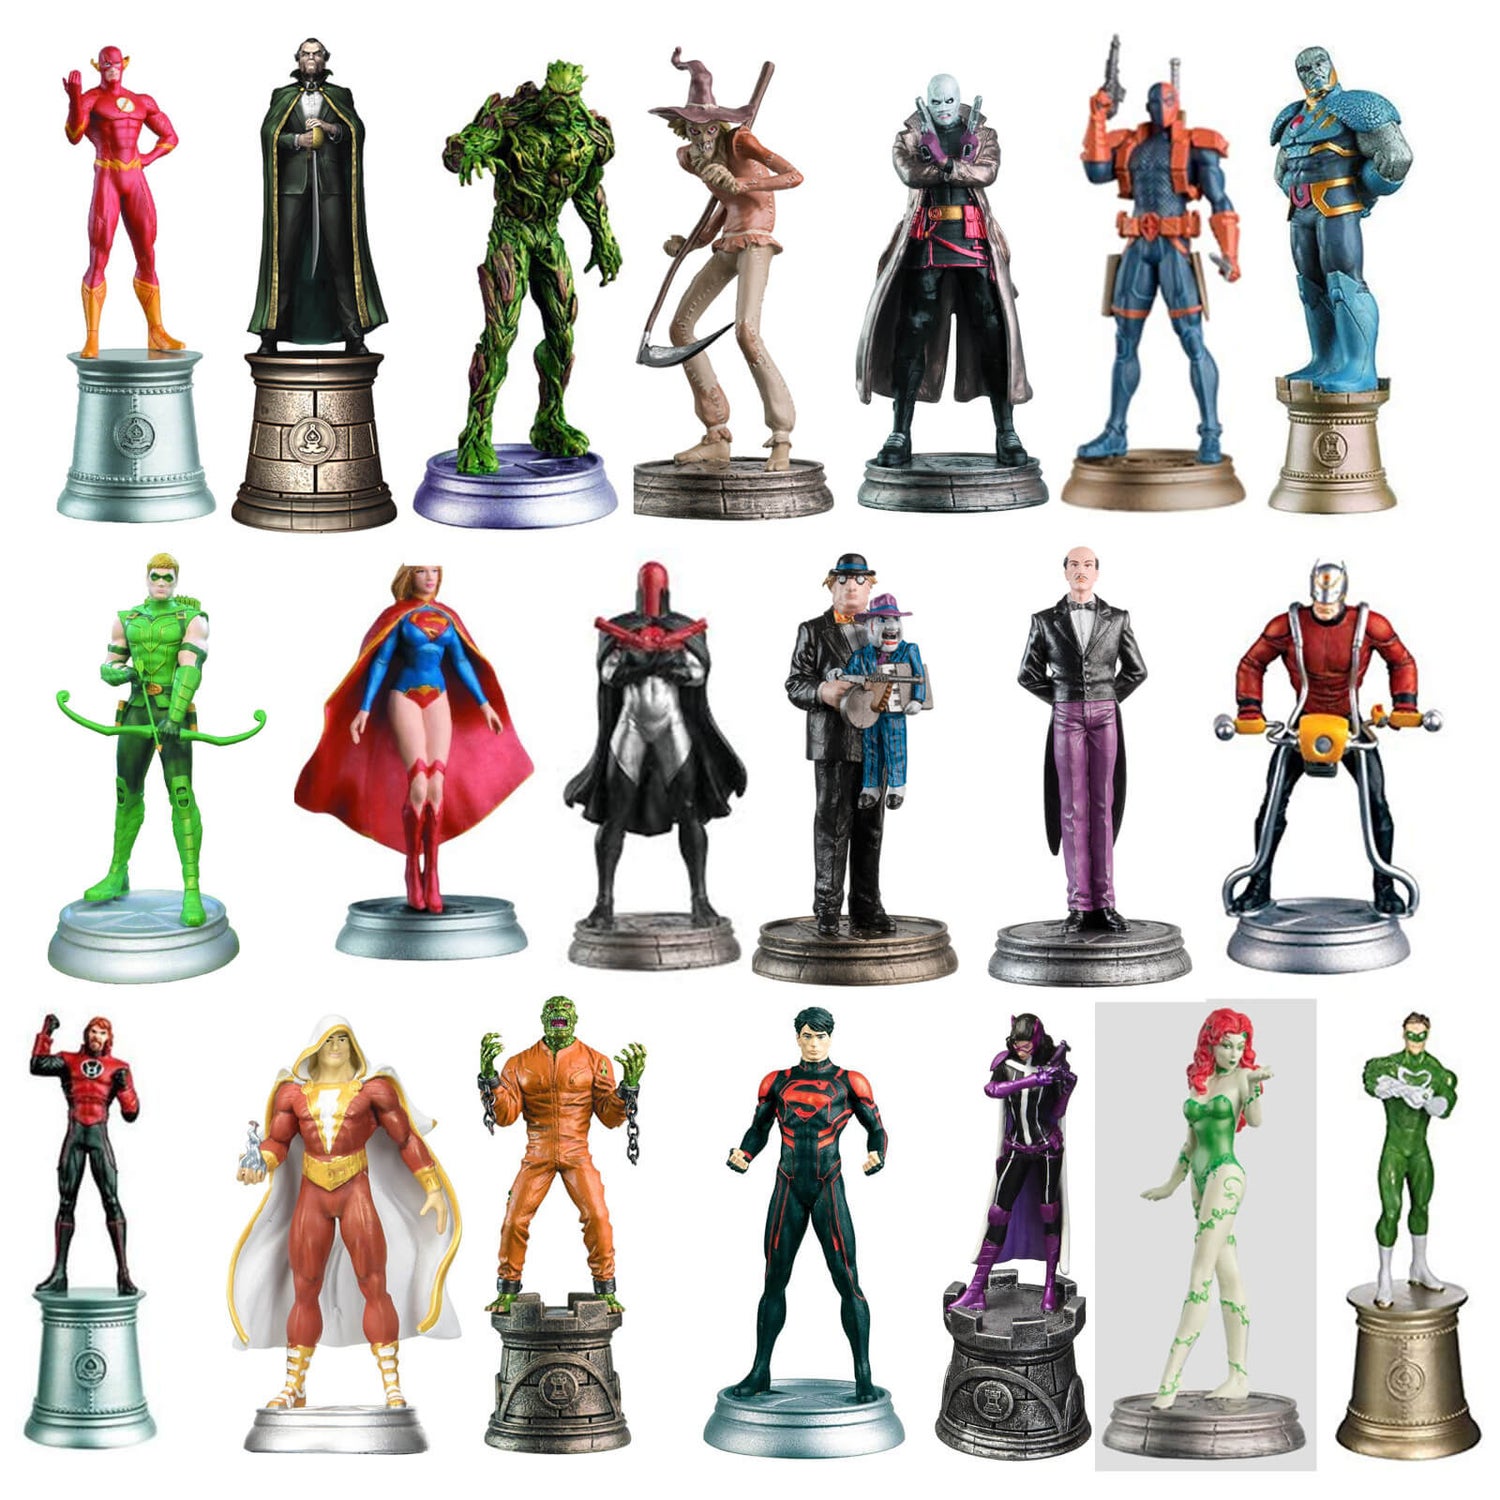 DC Comics Collector Lot de 20 figurines DC Comics à collectionner (Lot 2)